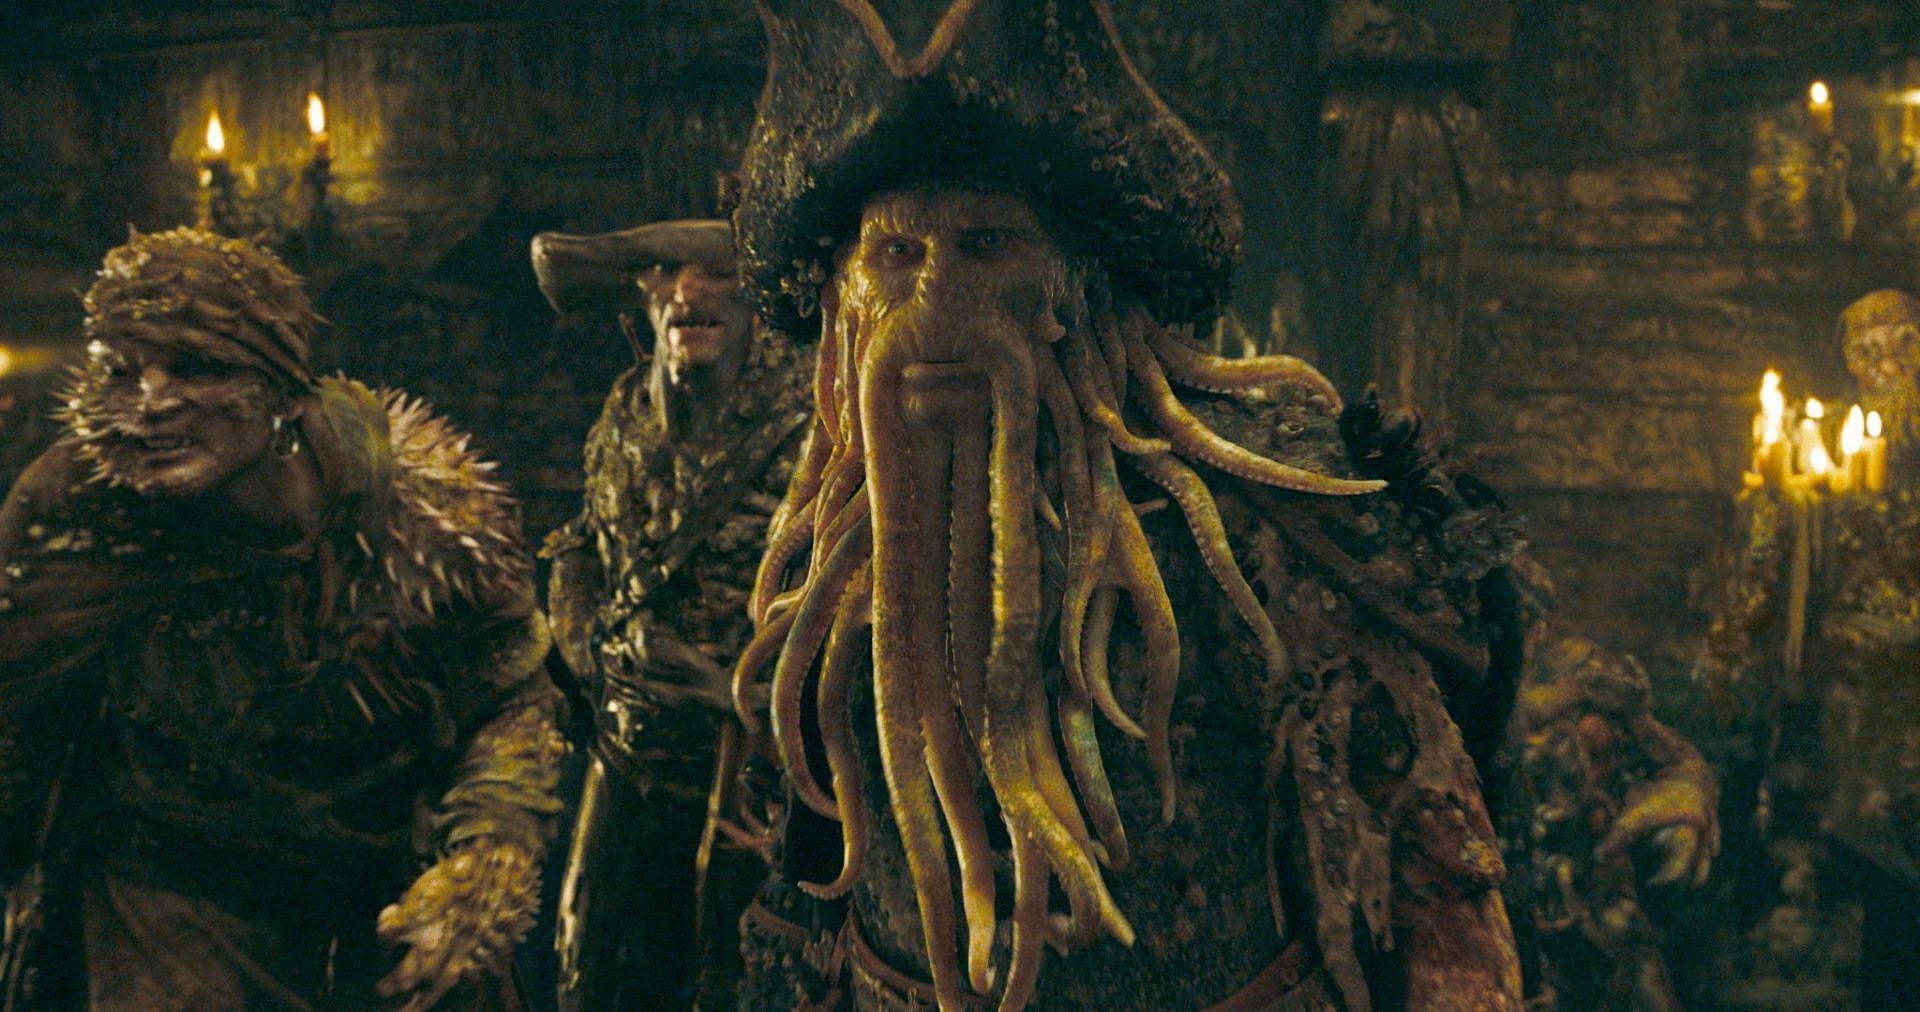 The monster Jones as he appears in the film (Image via Disney)